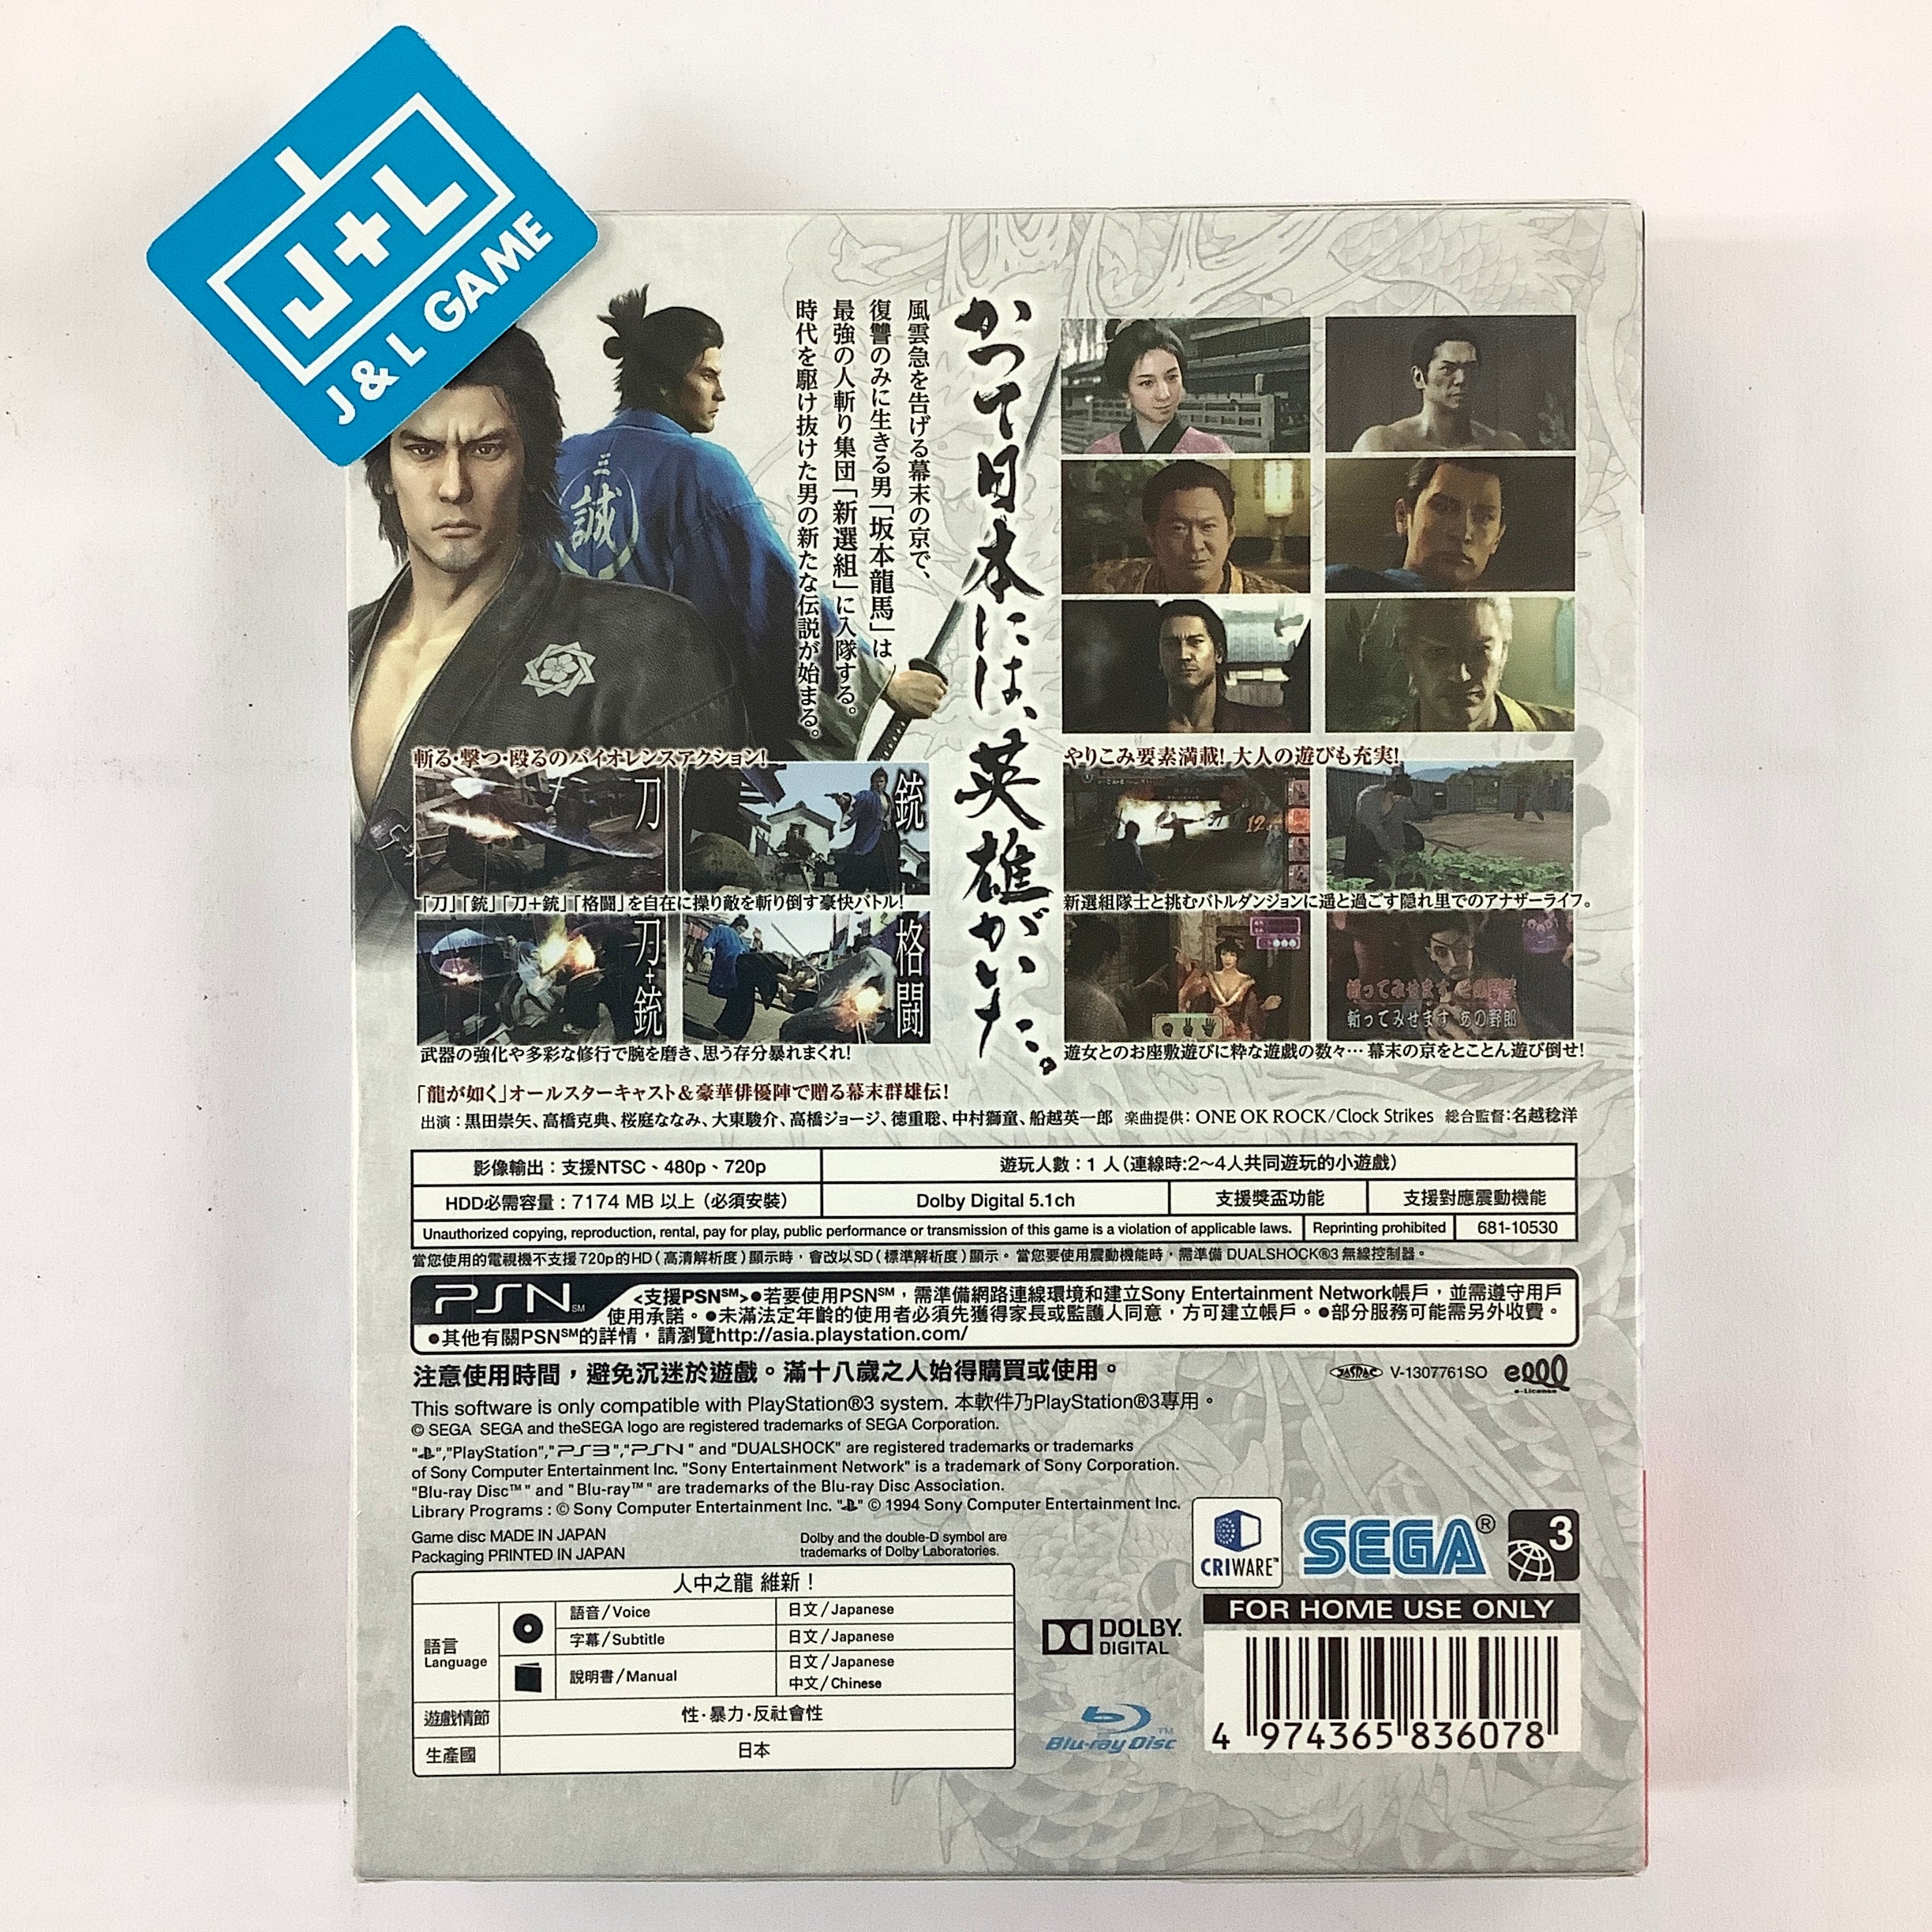 Ryu ga Gotoku: Ishin! - (PS3) PlayStation 3 (Asia Import) Video Games Sega   